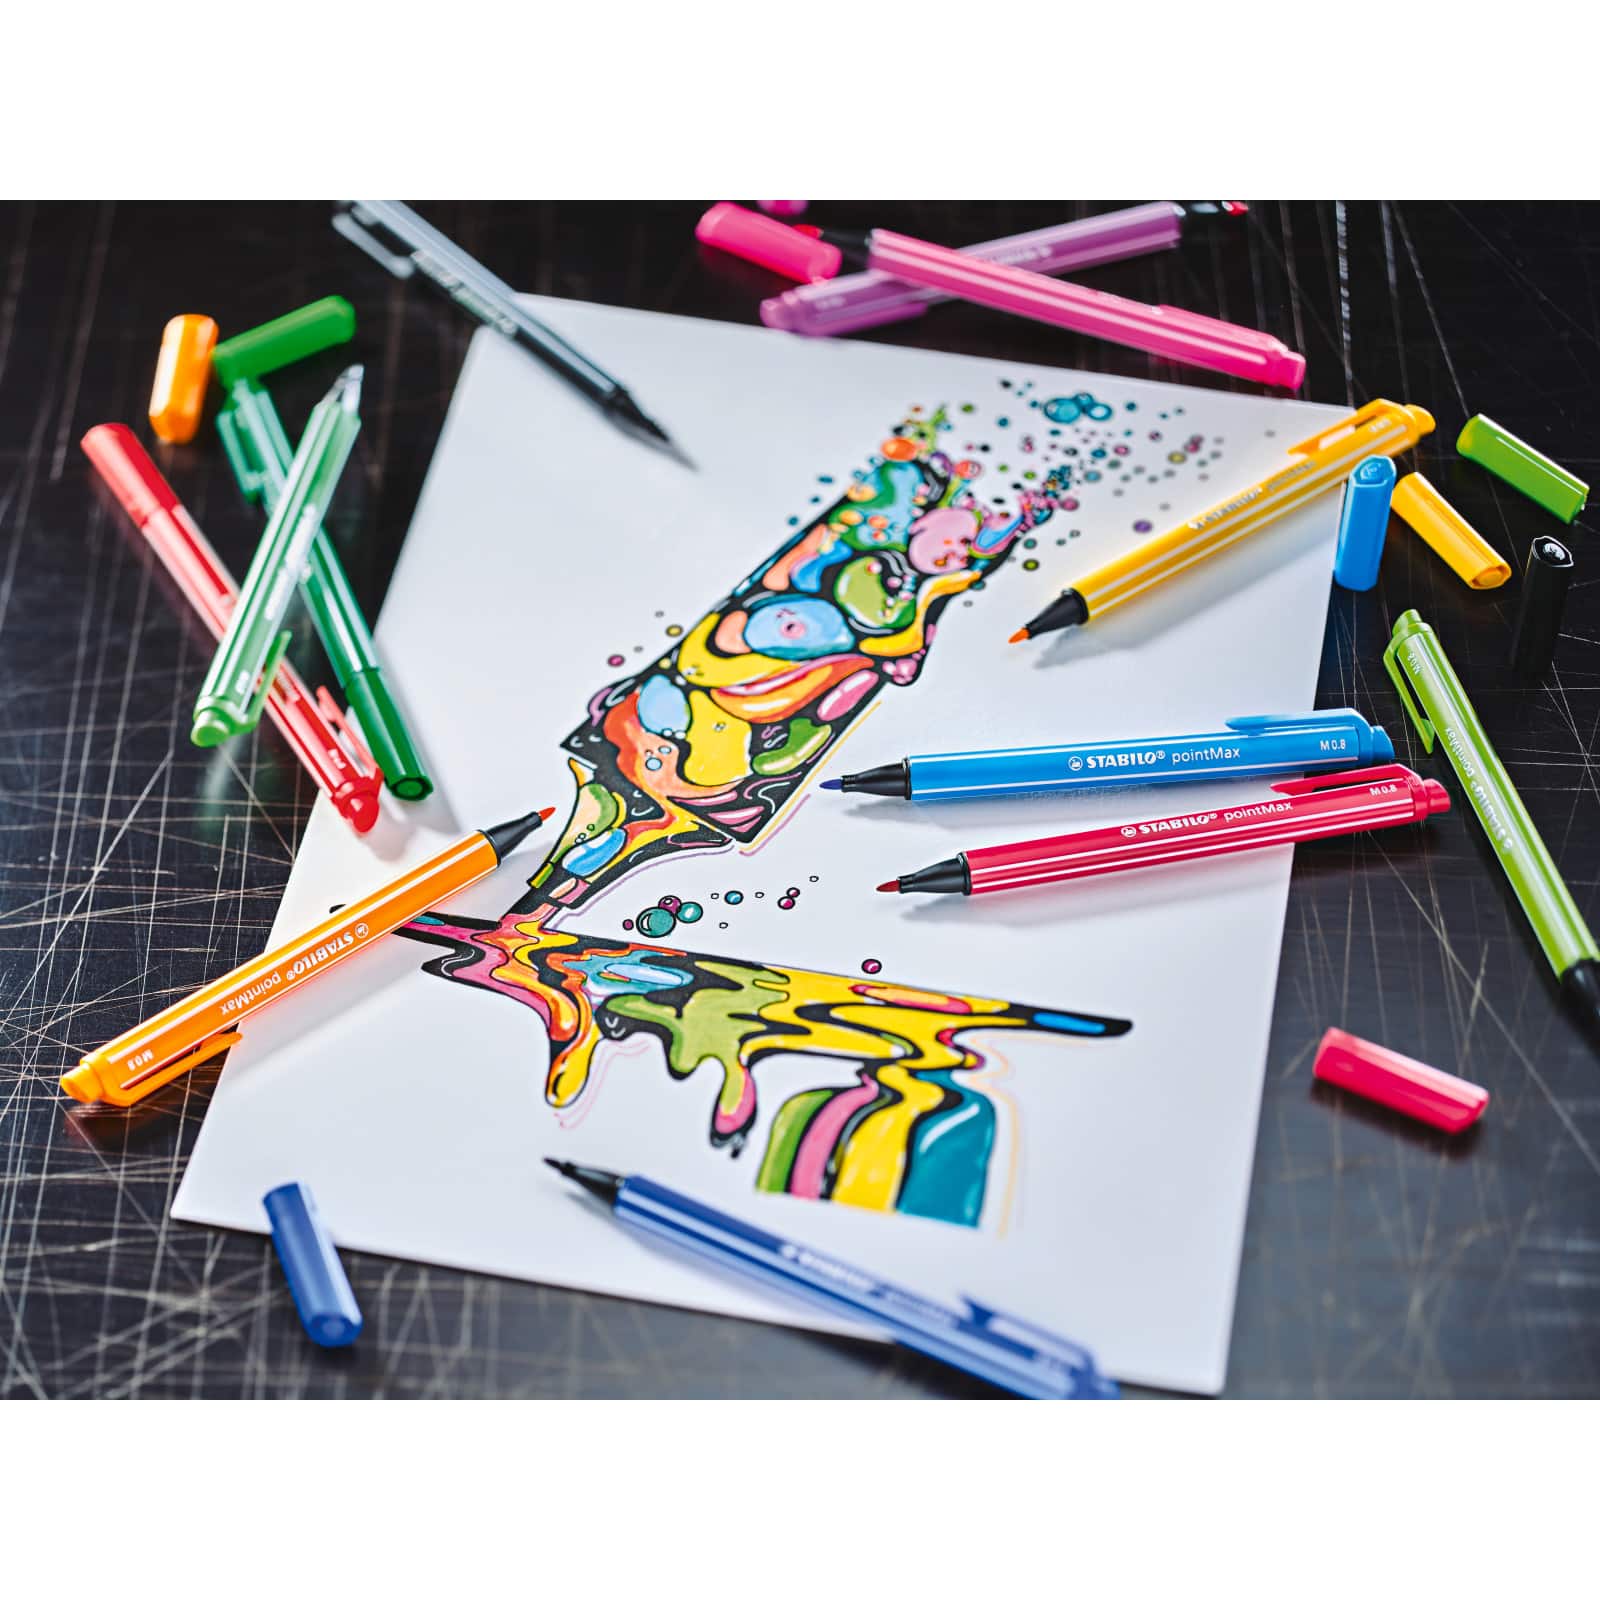 STABILO&#xAE; ARTY pointMax 18-Pen Set